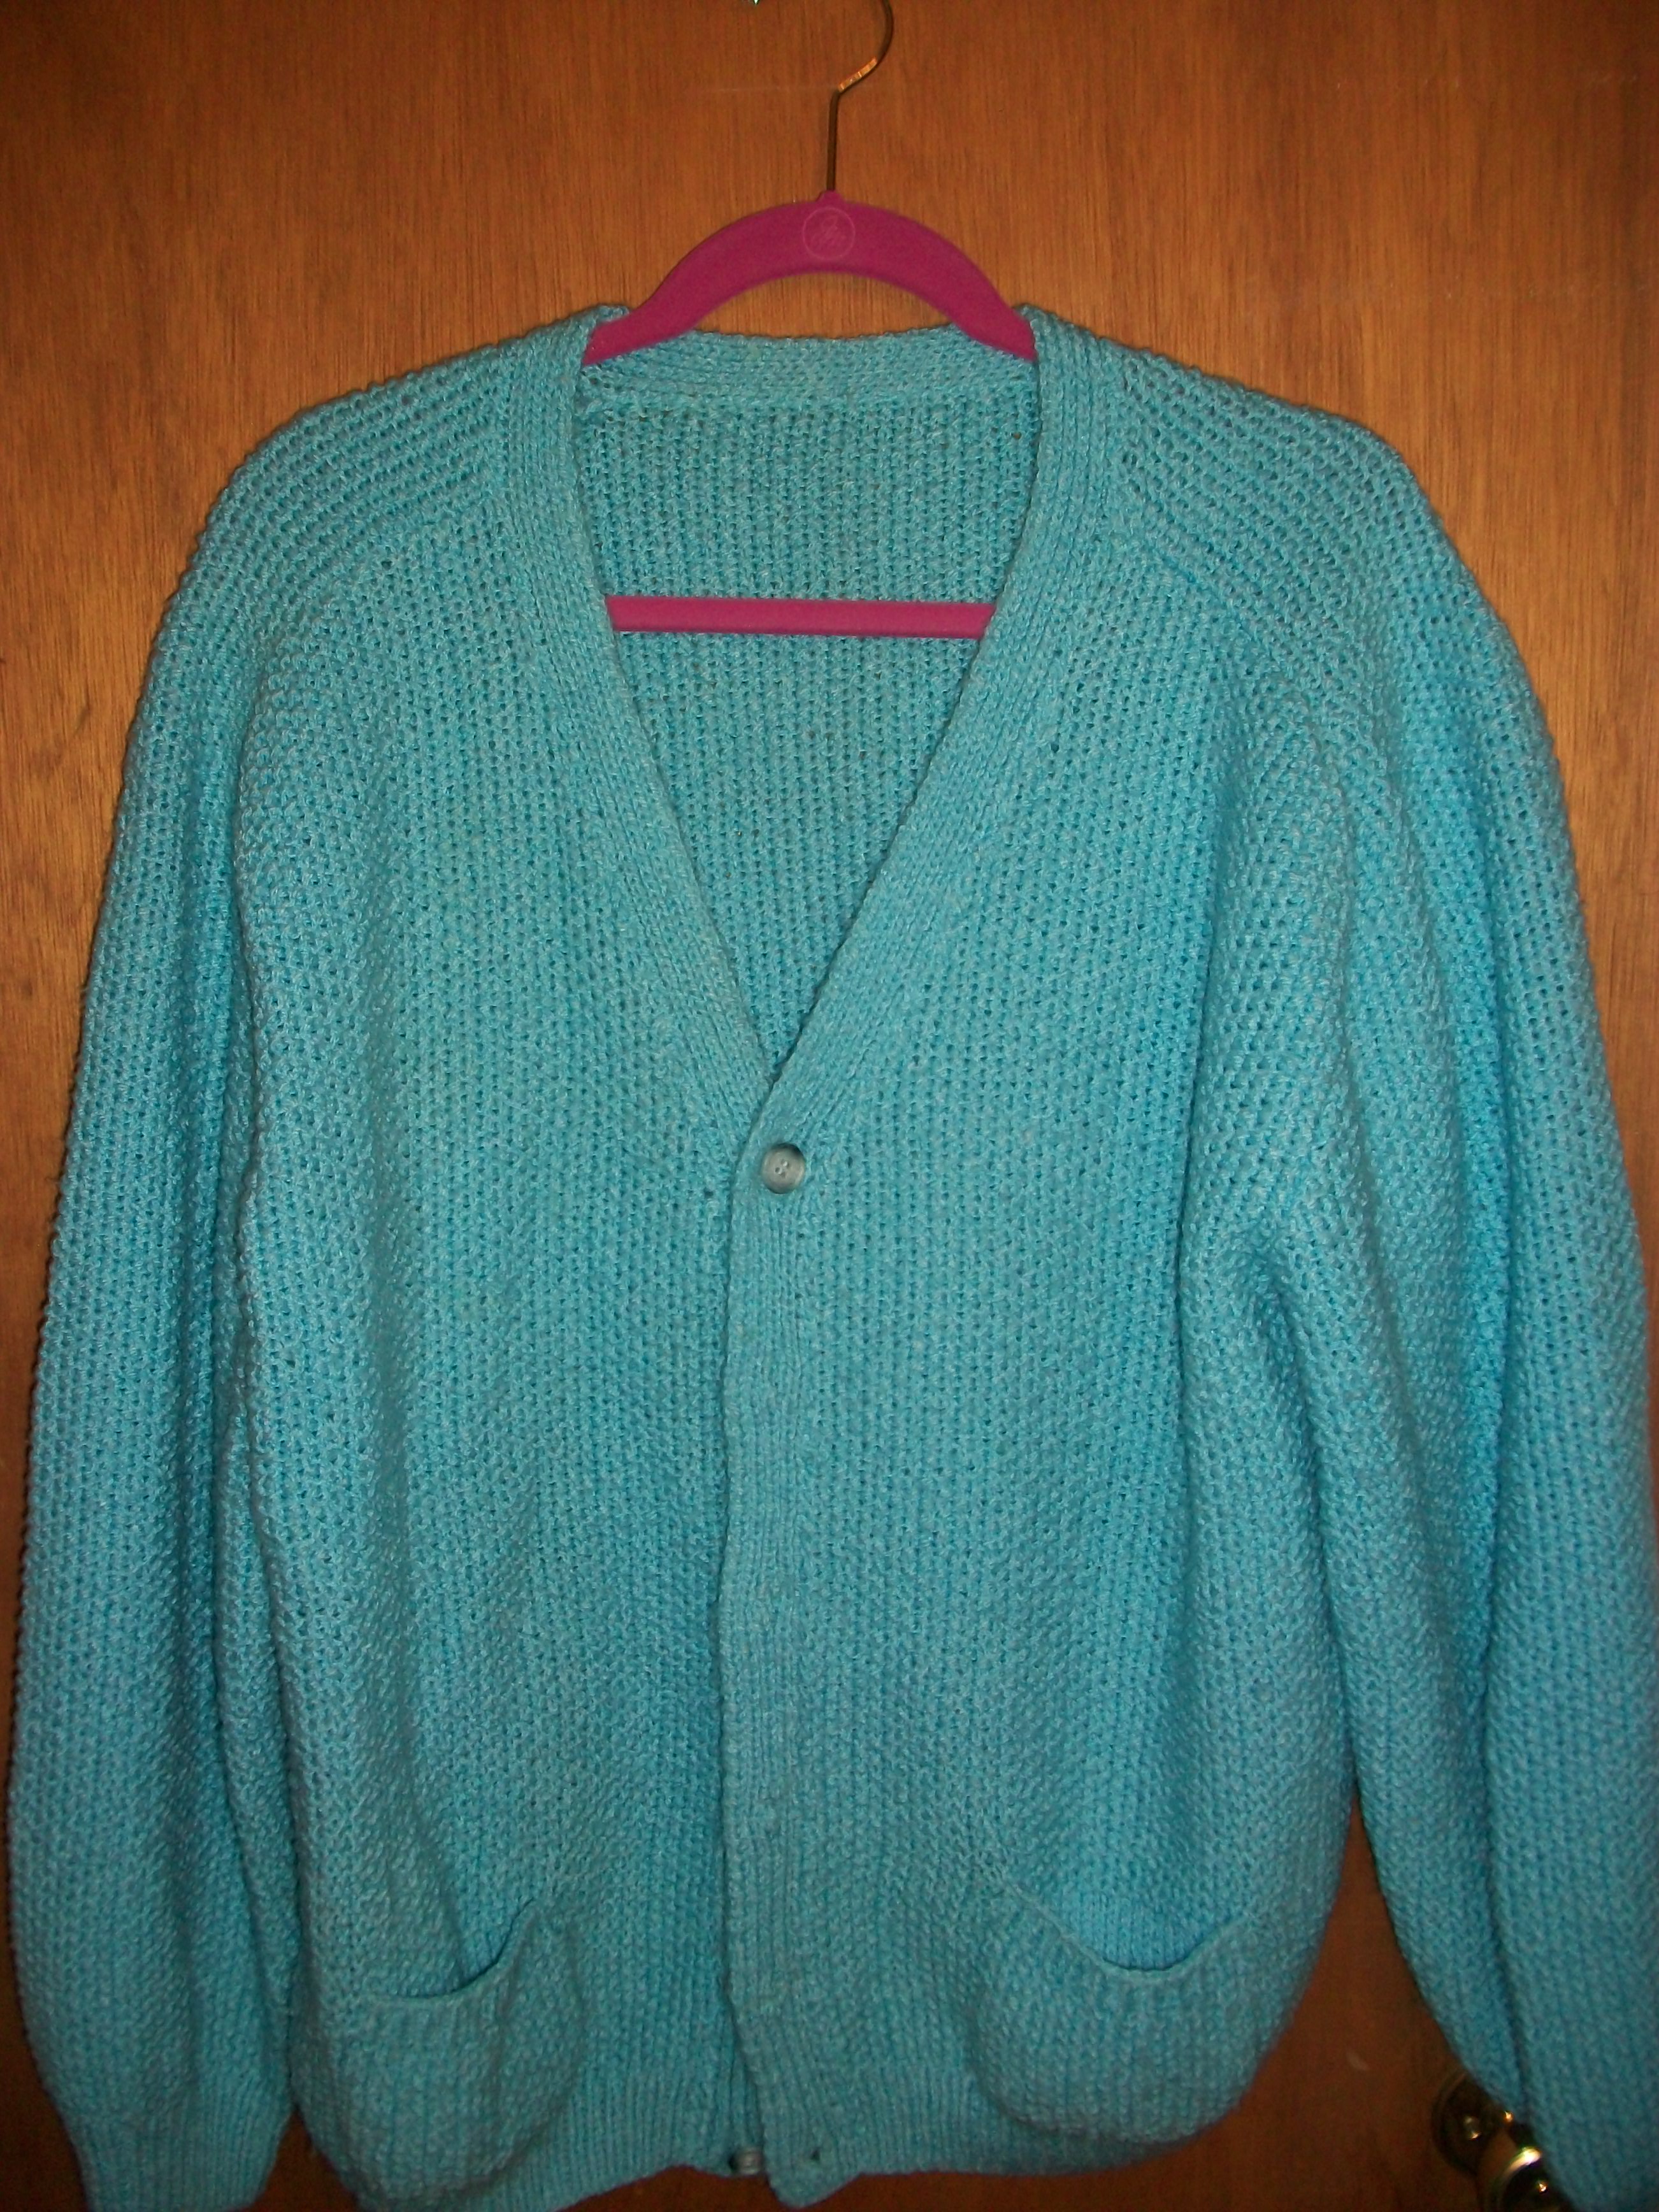 Aqua knit long sleeve sweater